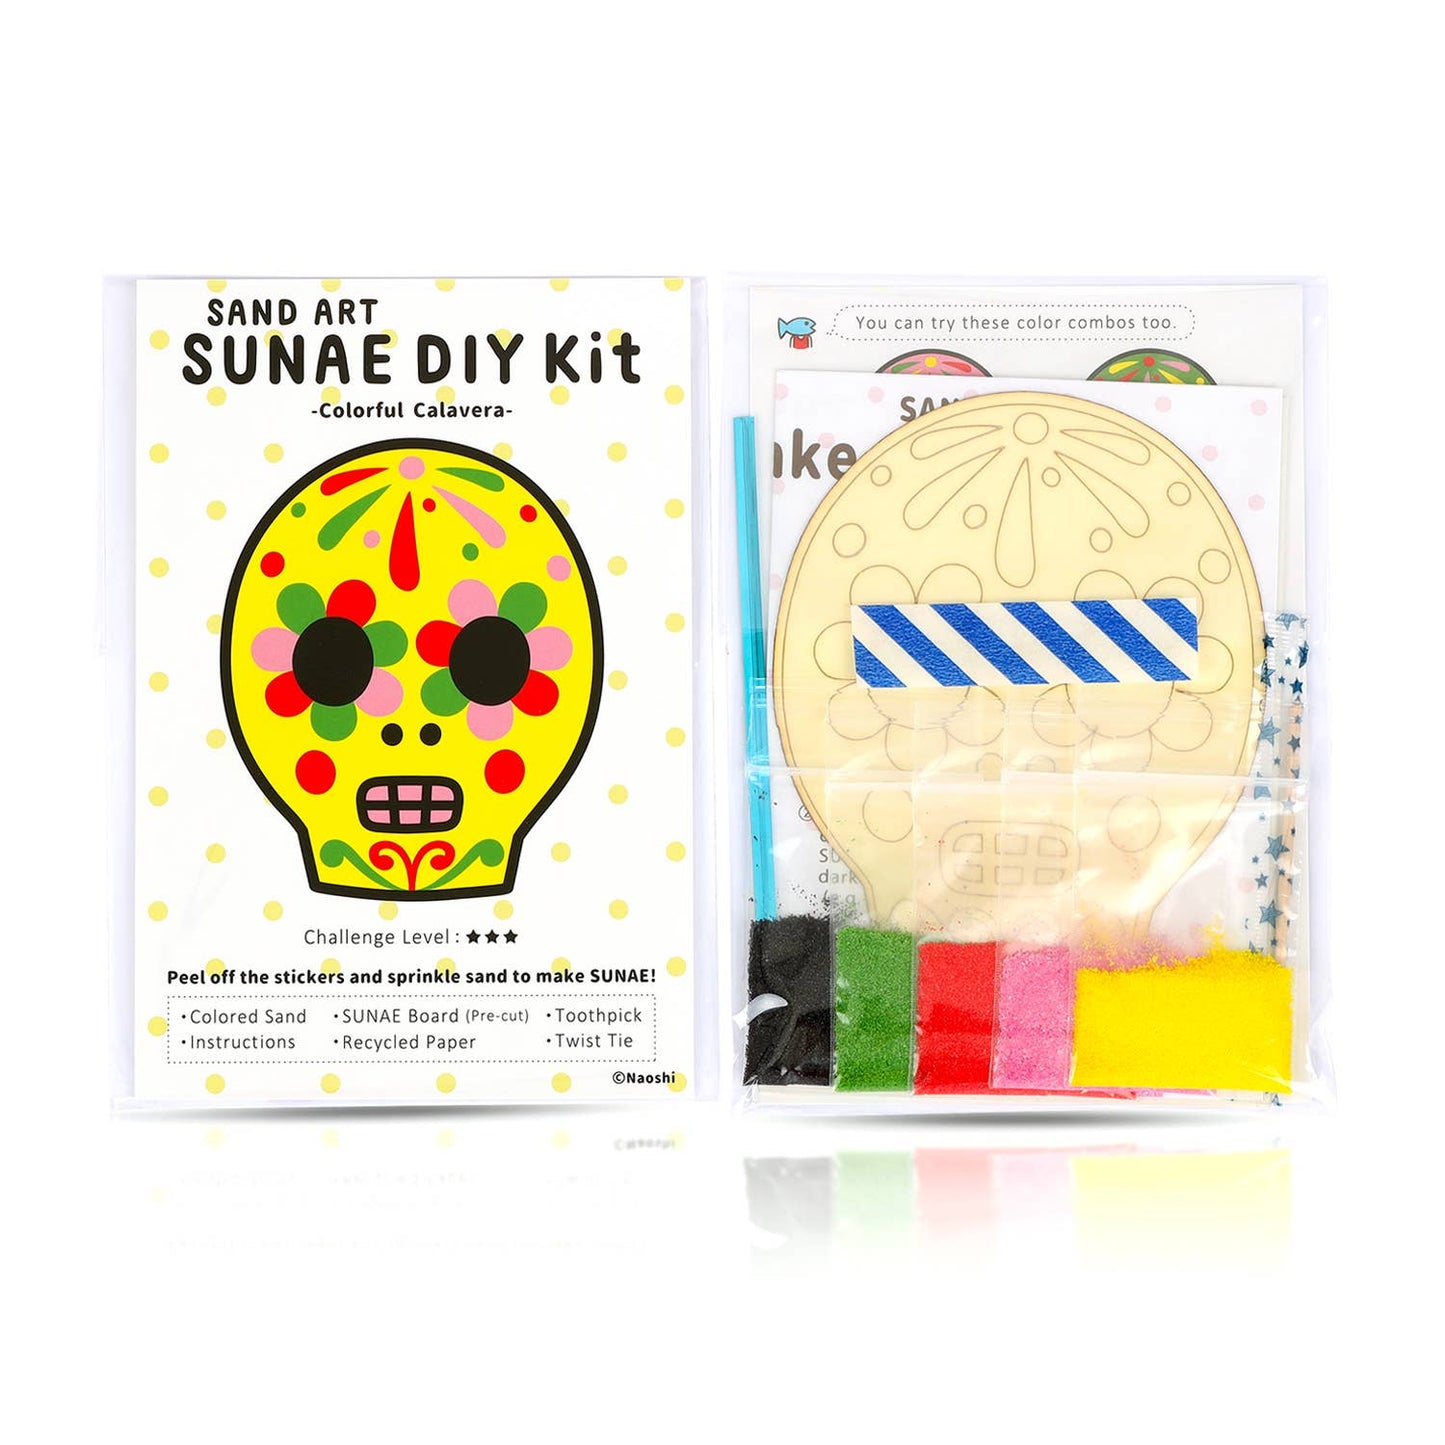 Colorful Calavera Sand Art Kit